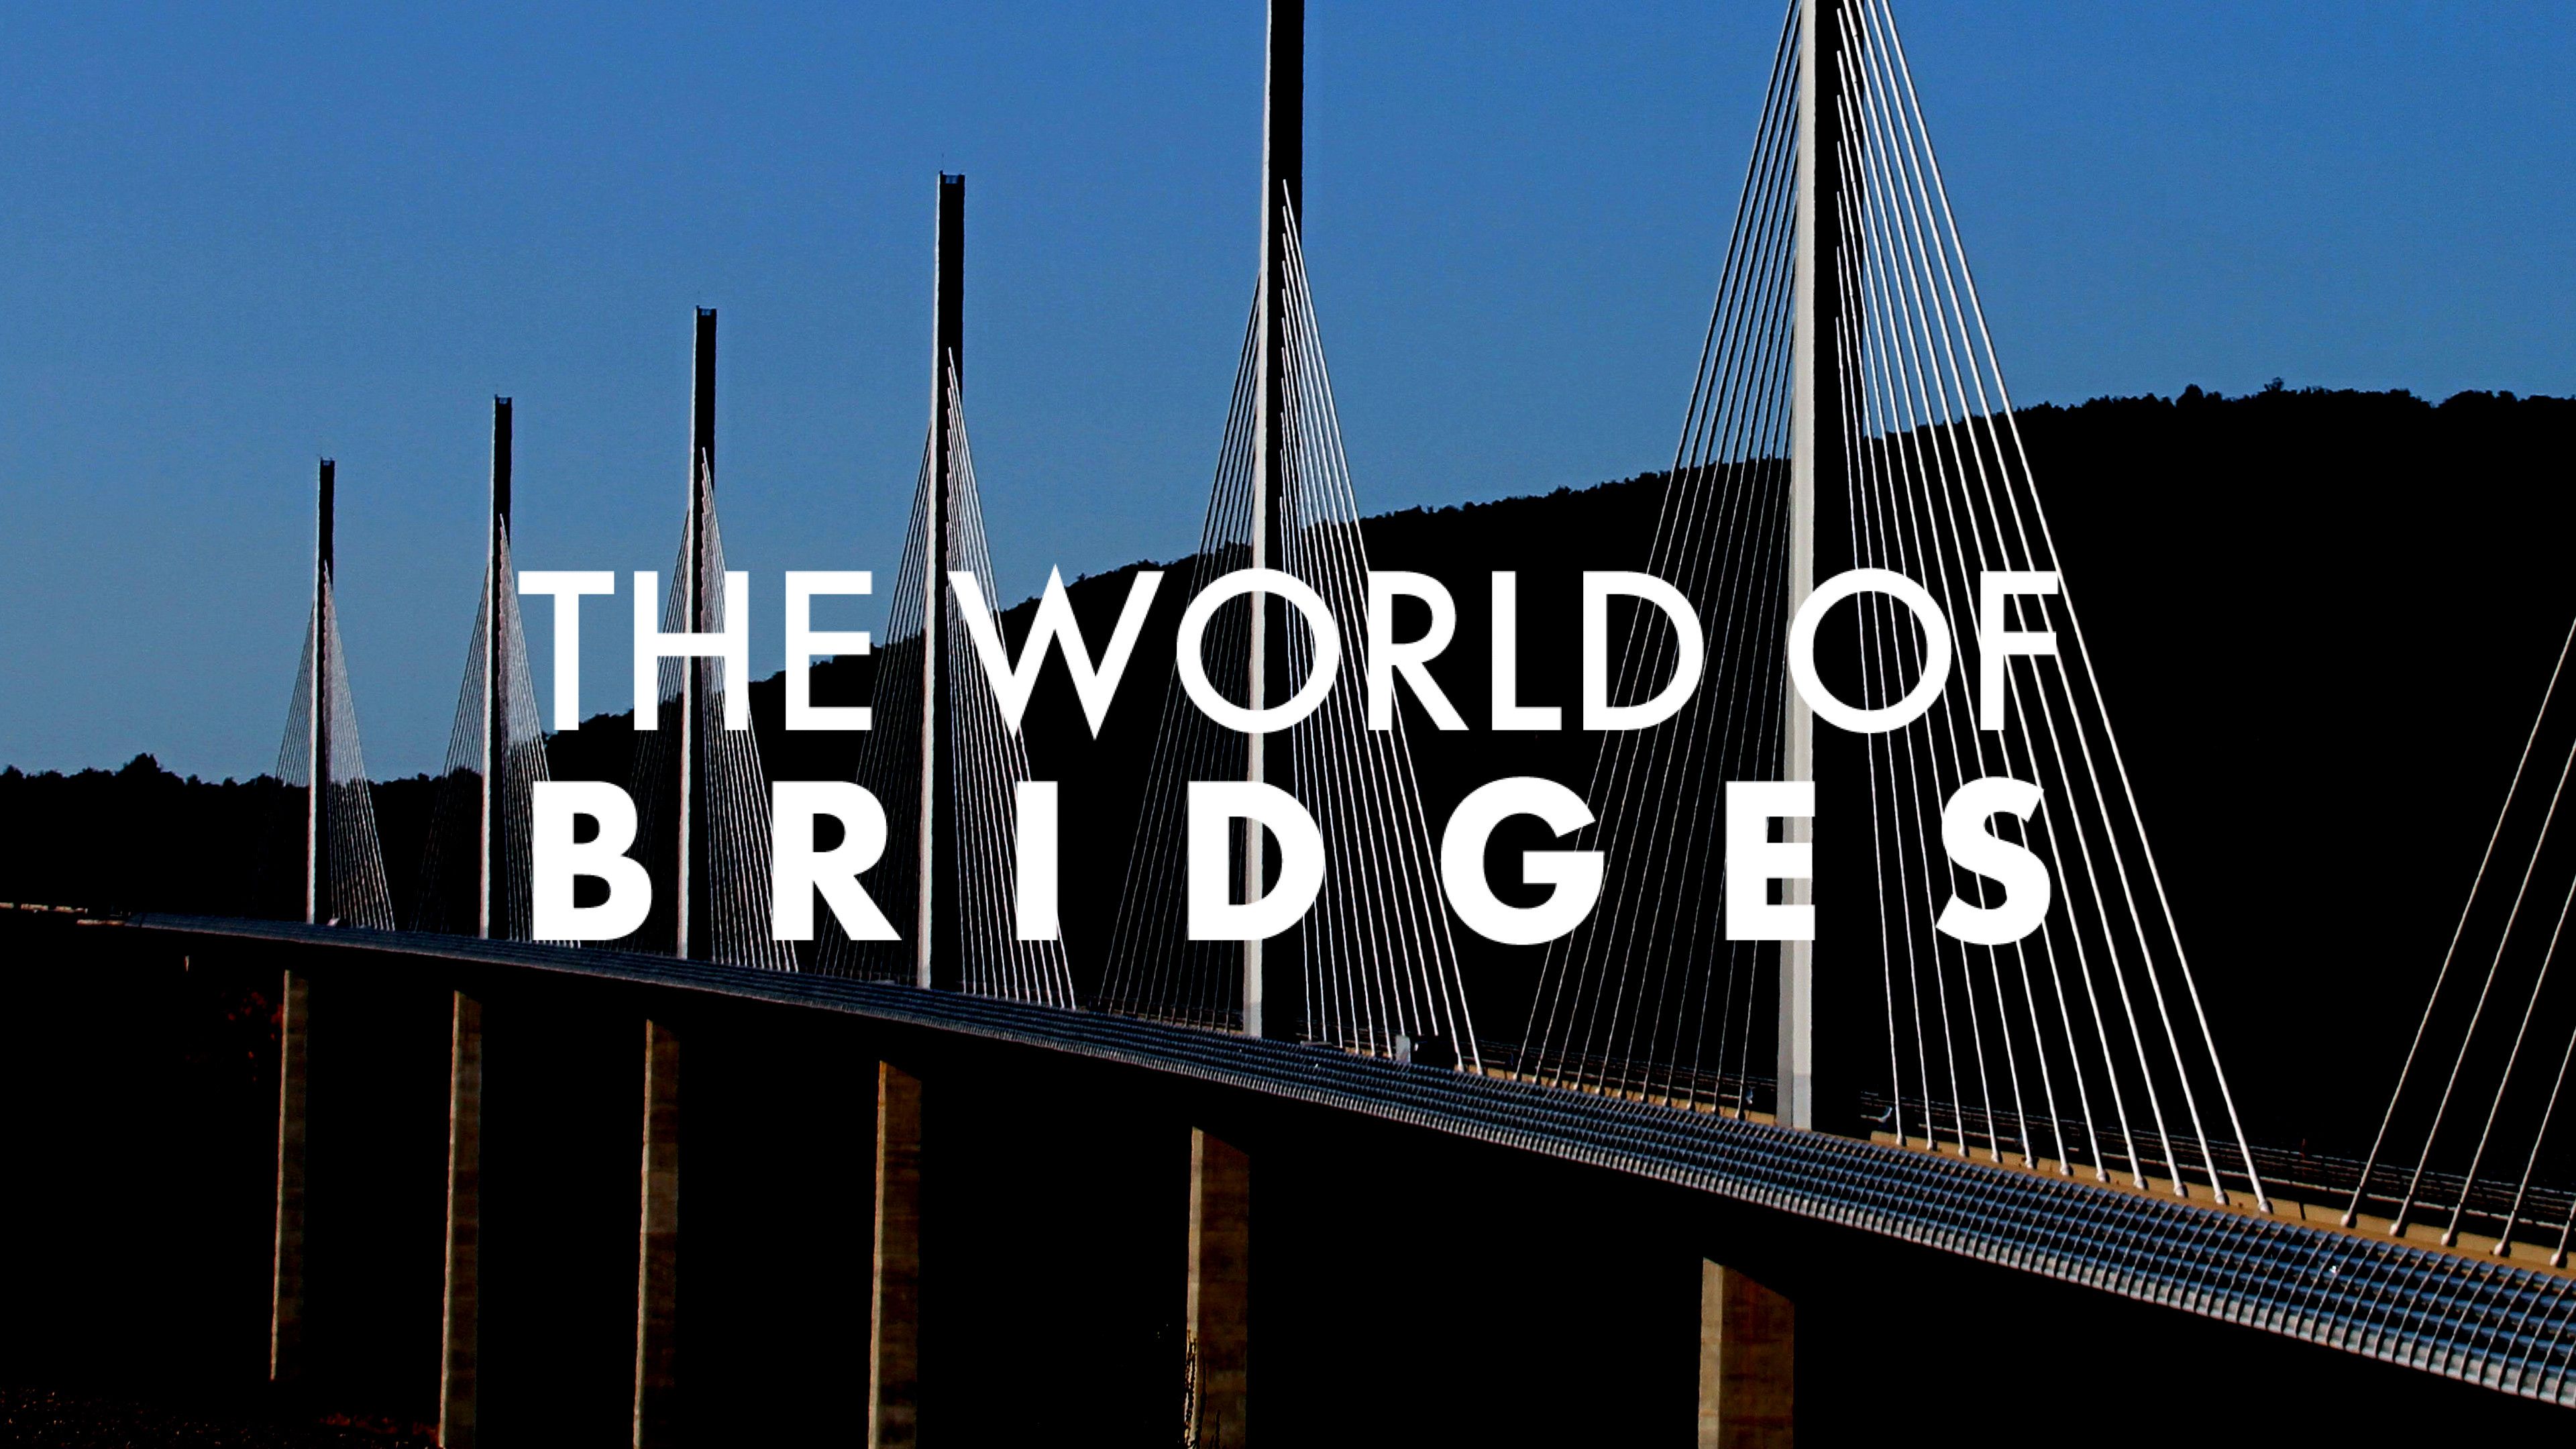 The World of Bridges